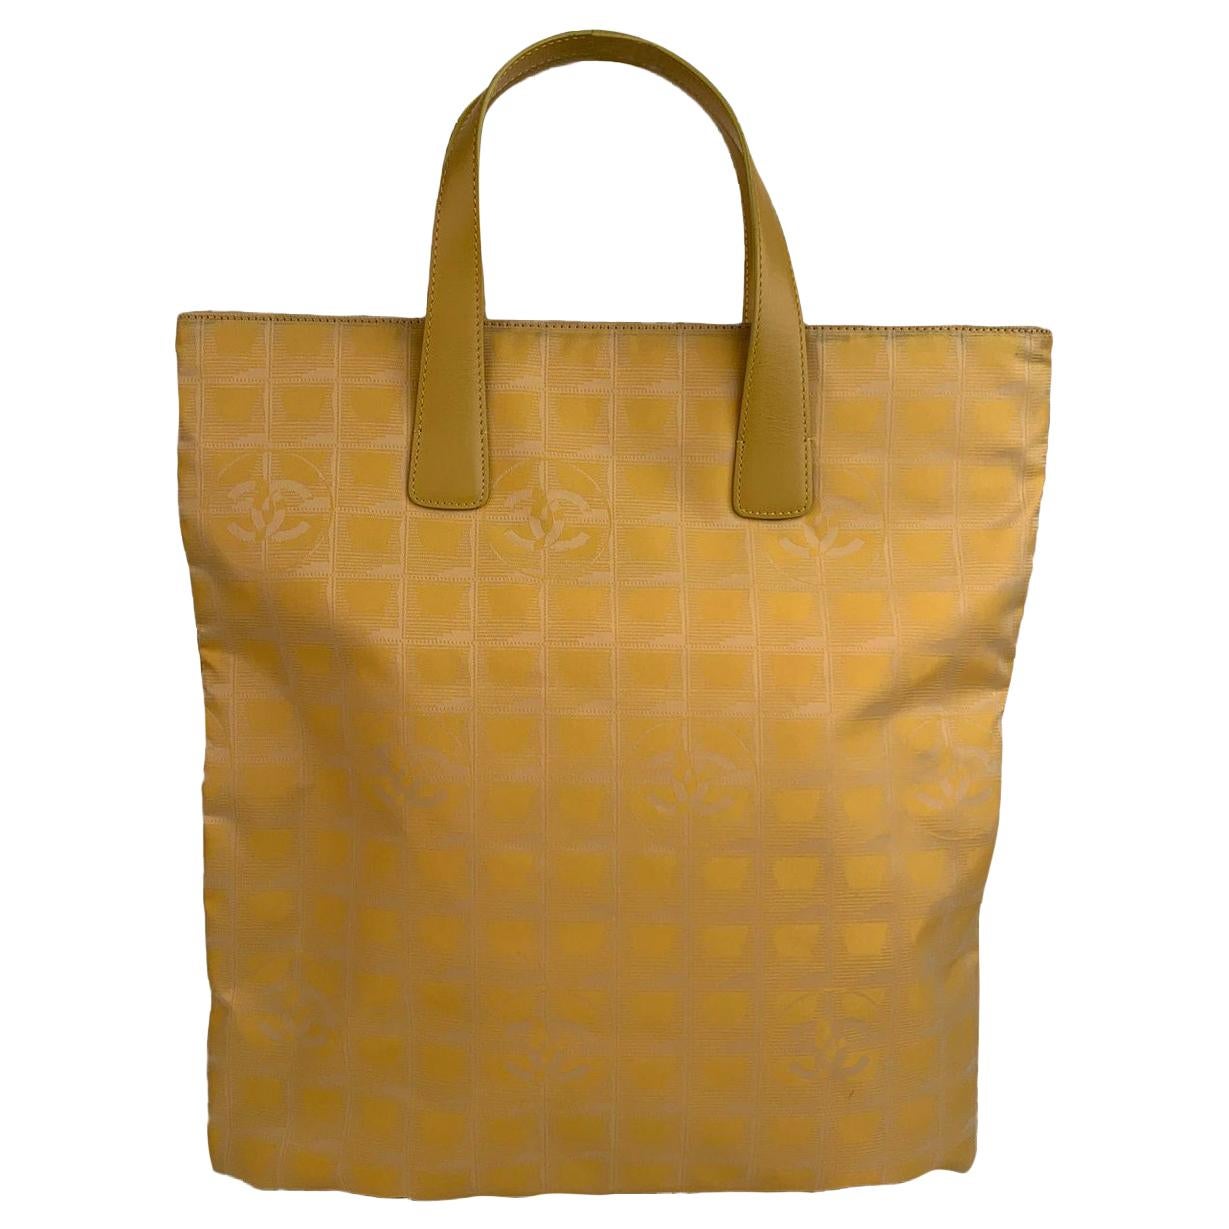 Chanel Yellow Nylon Canvas Travel Line Tote Bag Handbag